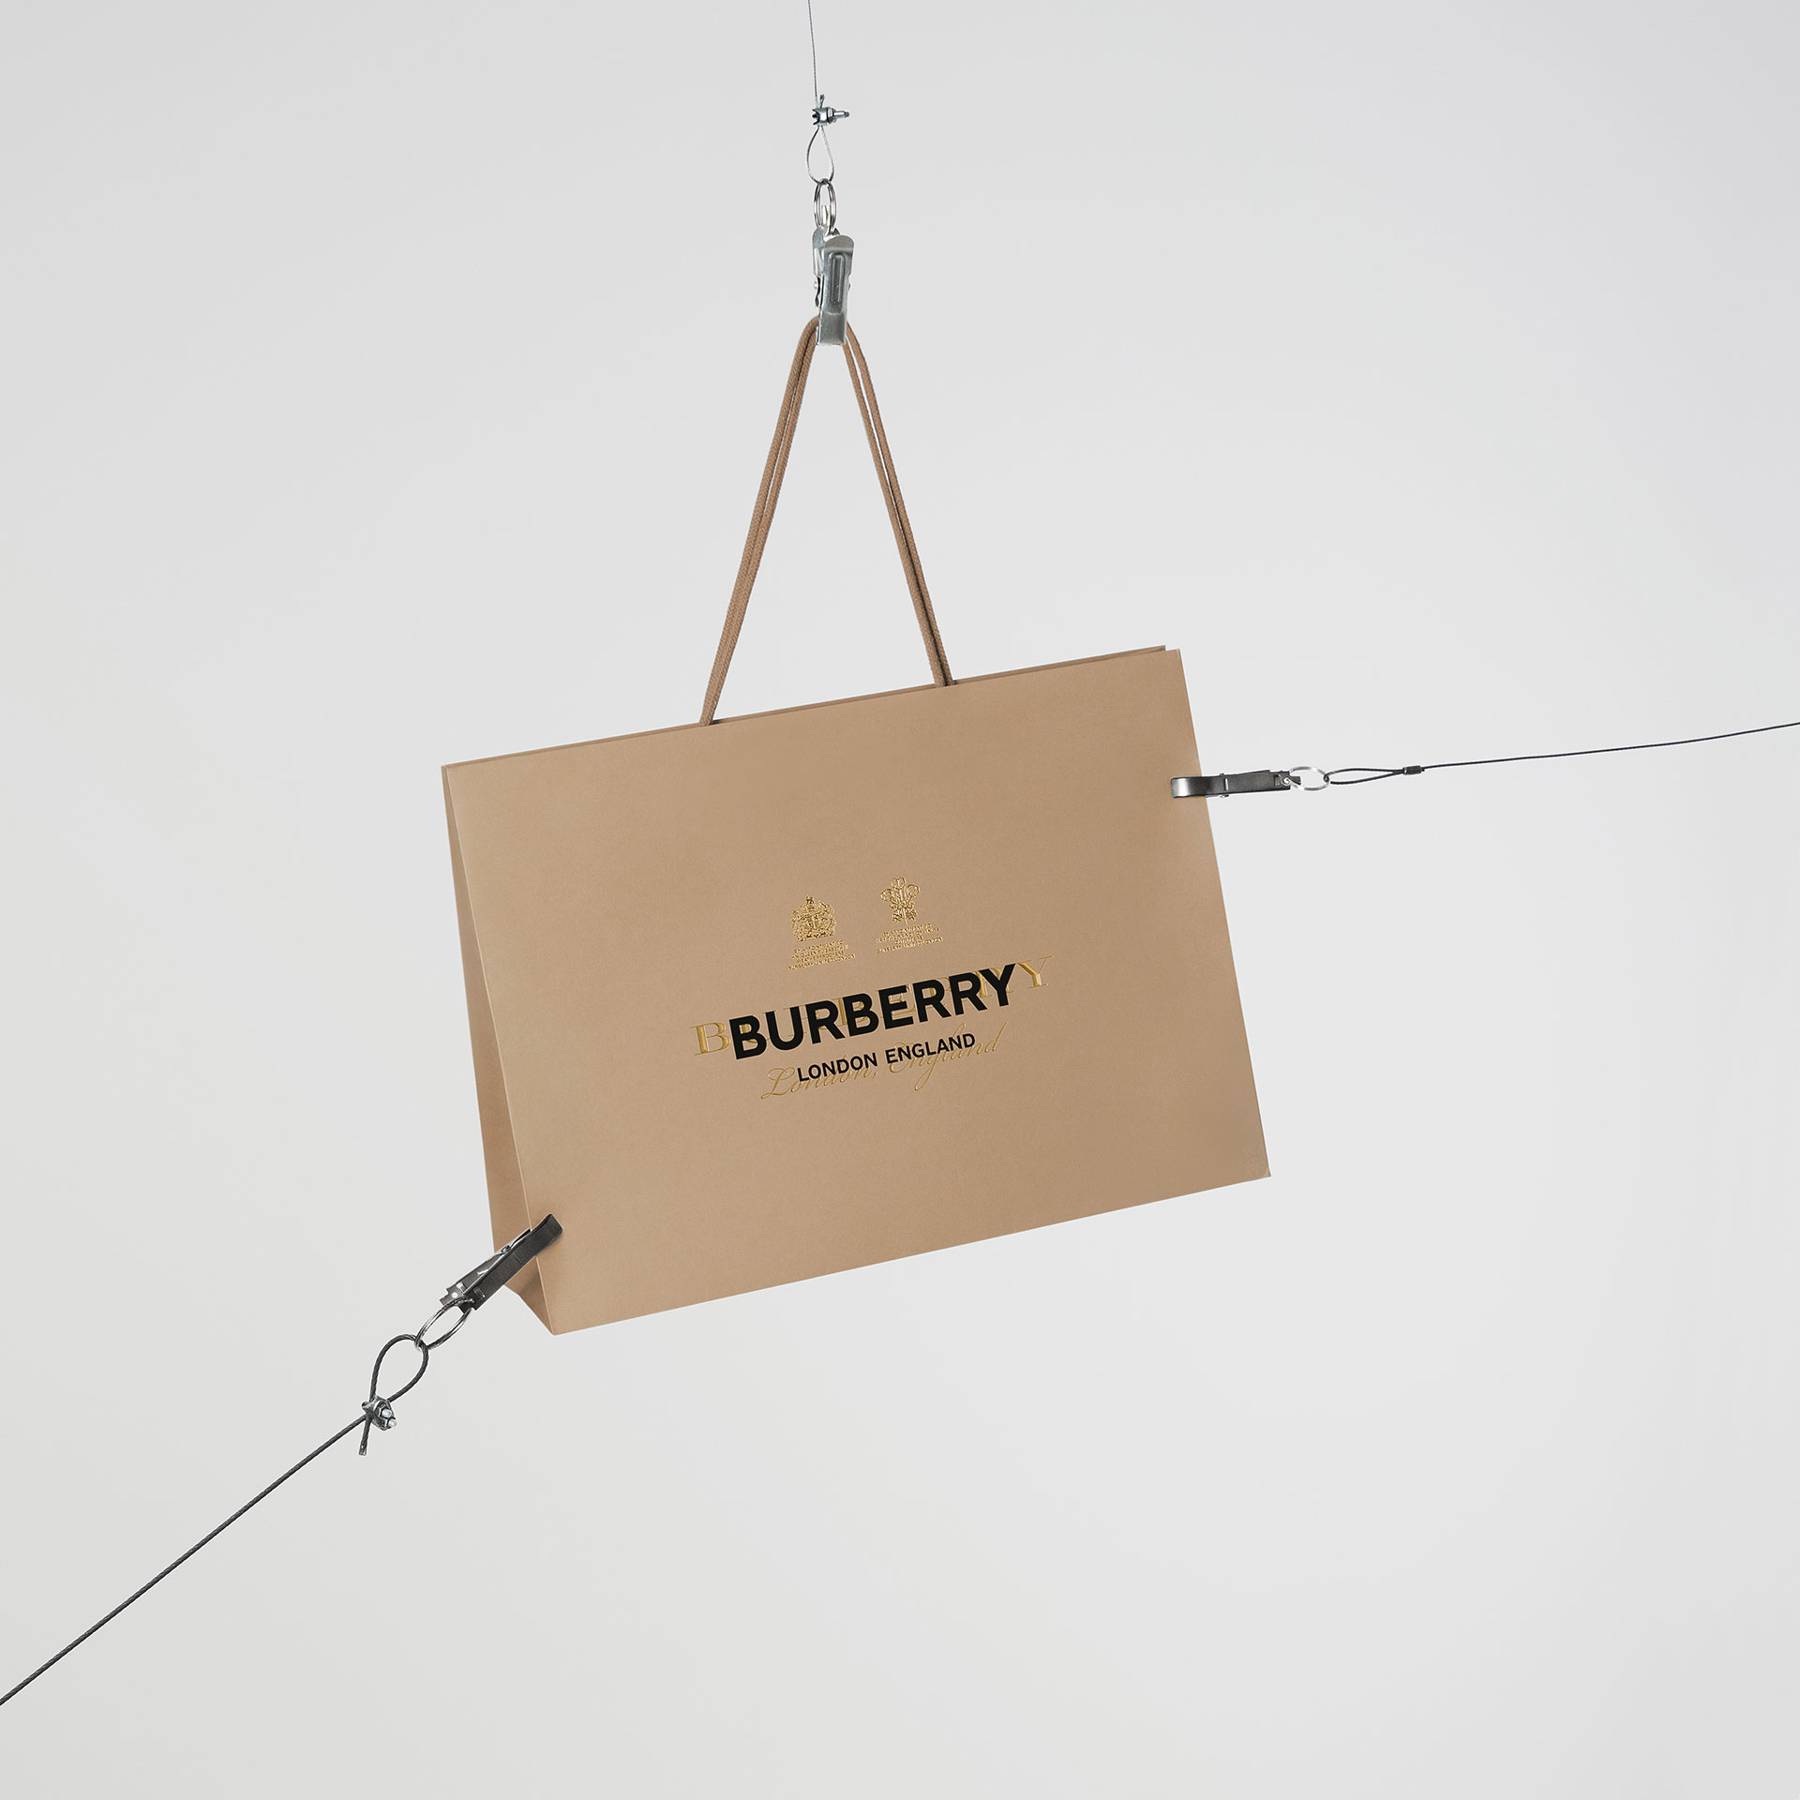 burberry-24-hour-product-releases-instagram-wechat-and-121-regent-street.jpg